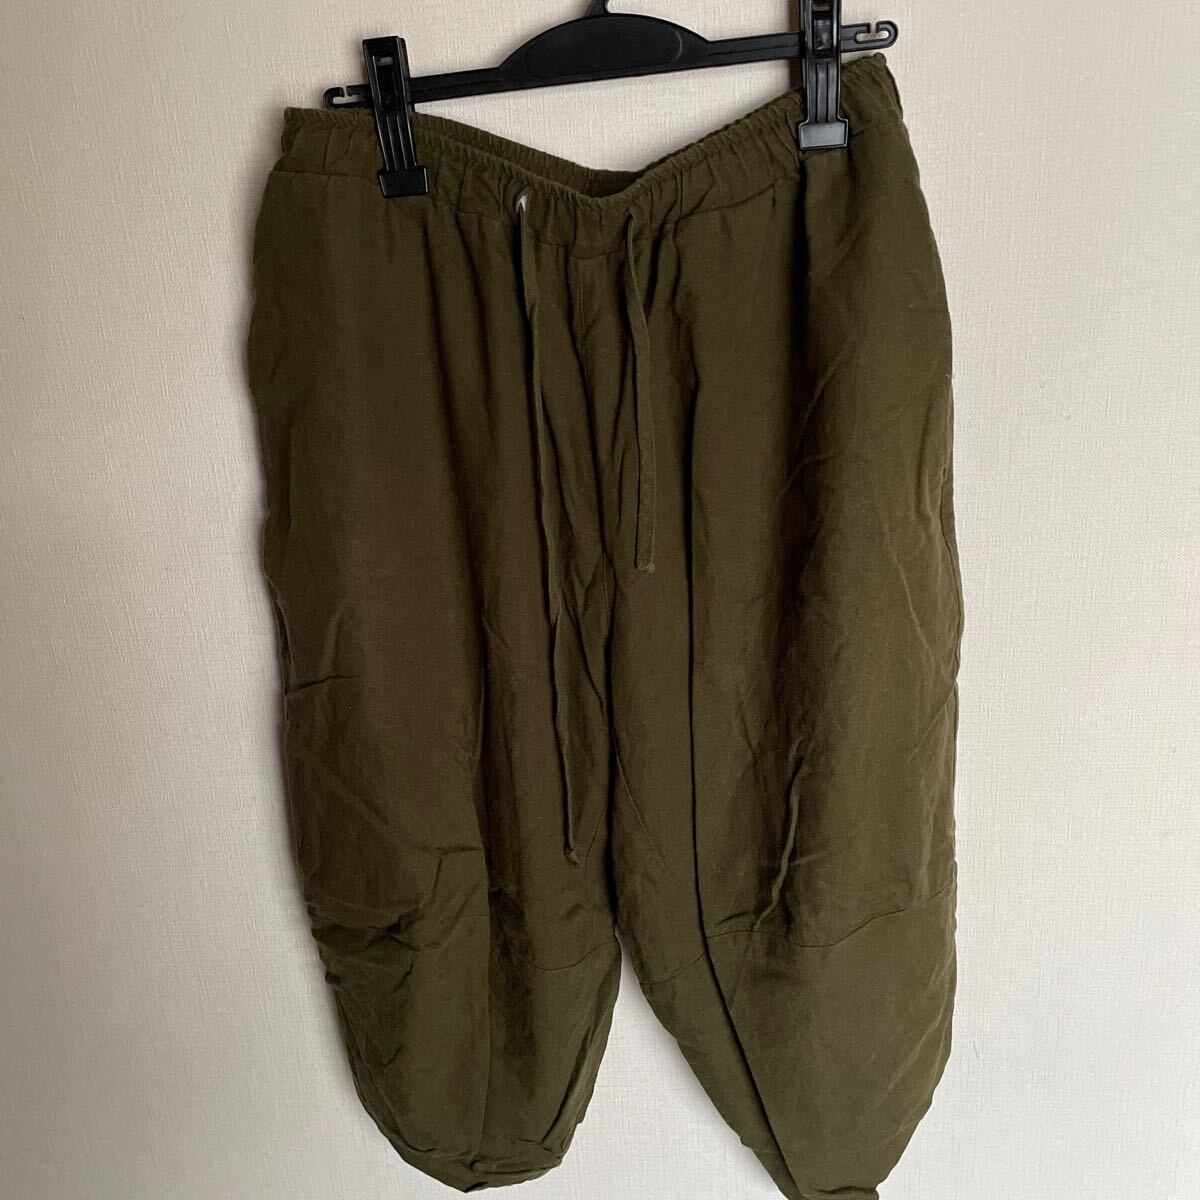 French Linen パンツ ズボン 七分丈 黒 緑 Lサイズ 2セット_画像2